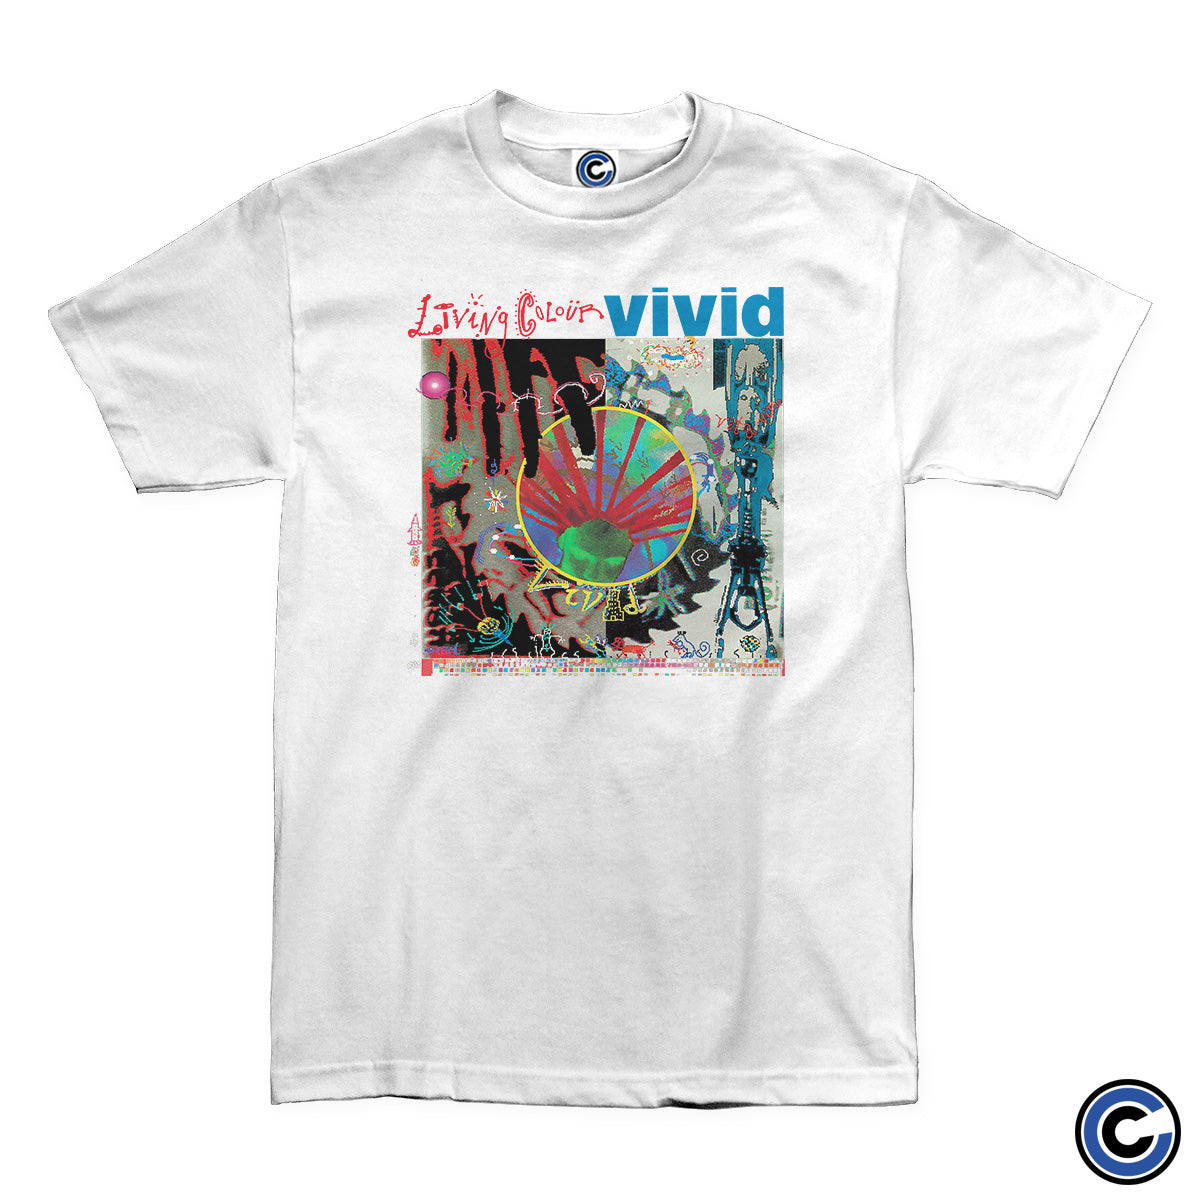 Living Colour "Vivid" Shirt